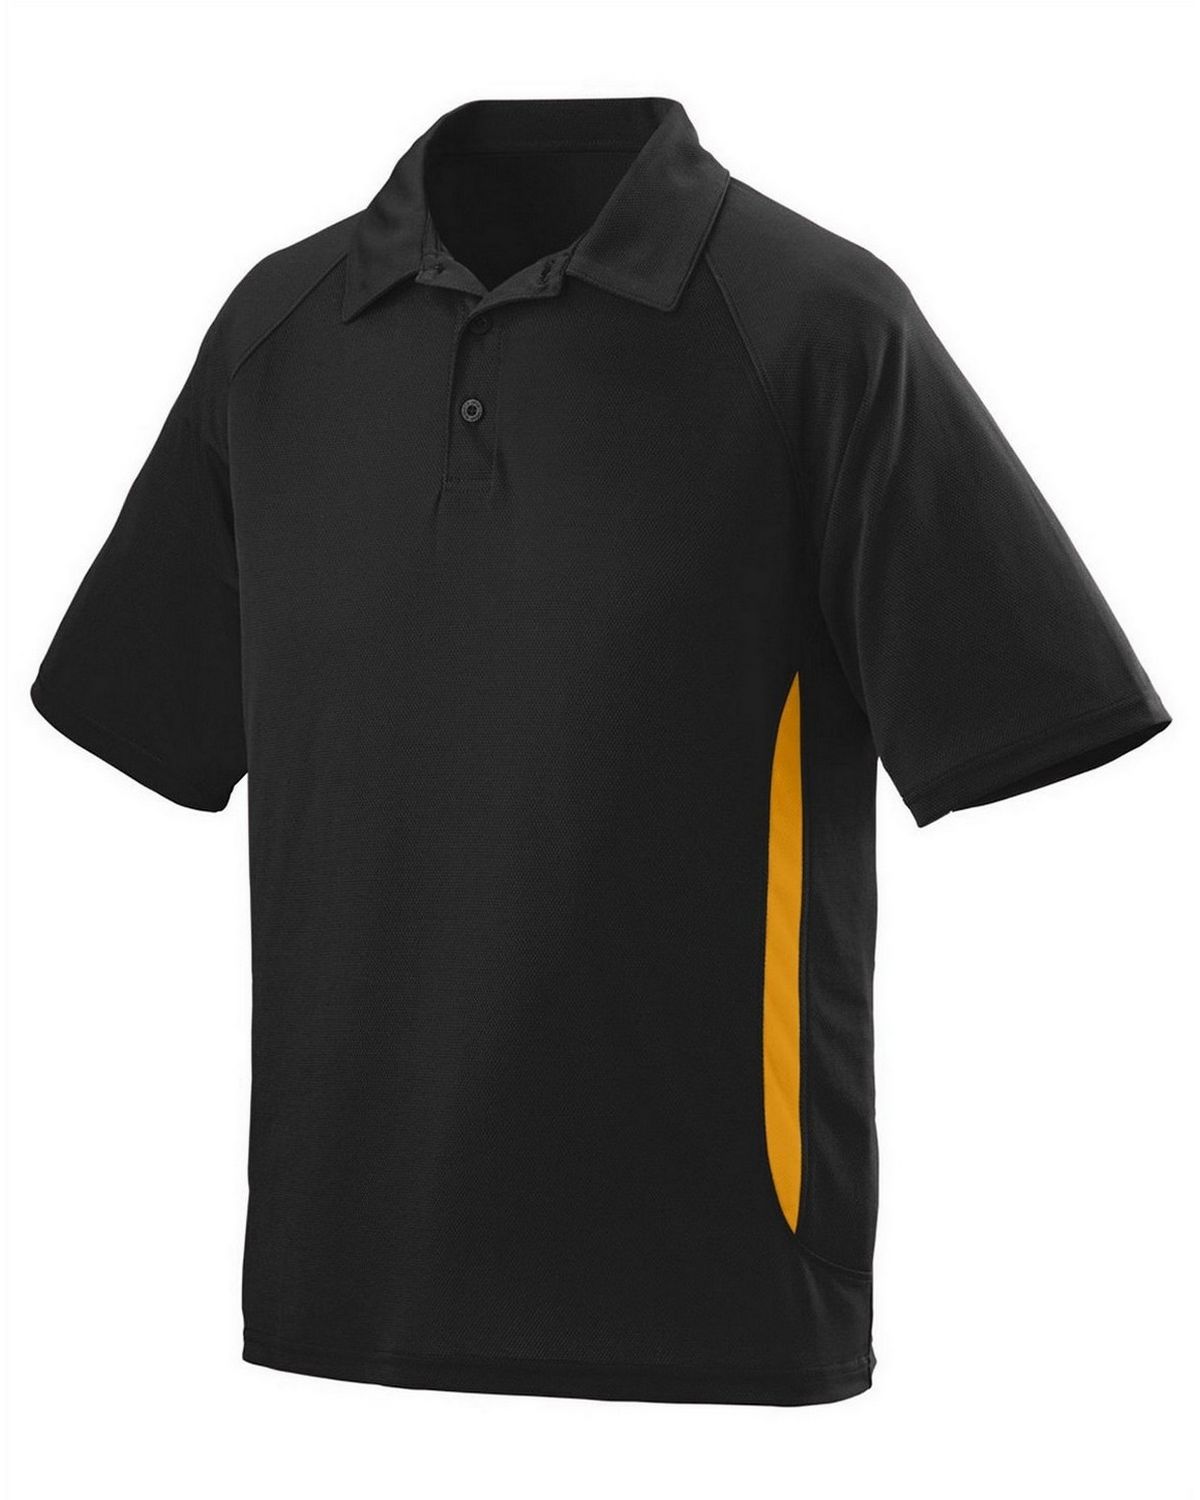 Augusta Sportswear 5005 Adult Wicking Polyester Sport Shirt